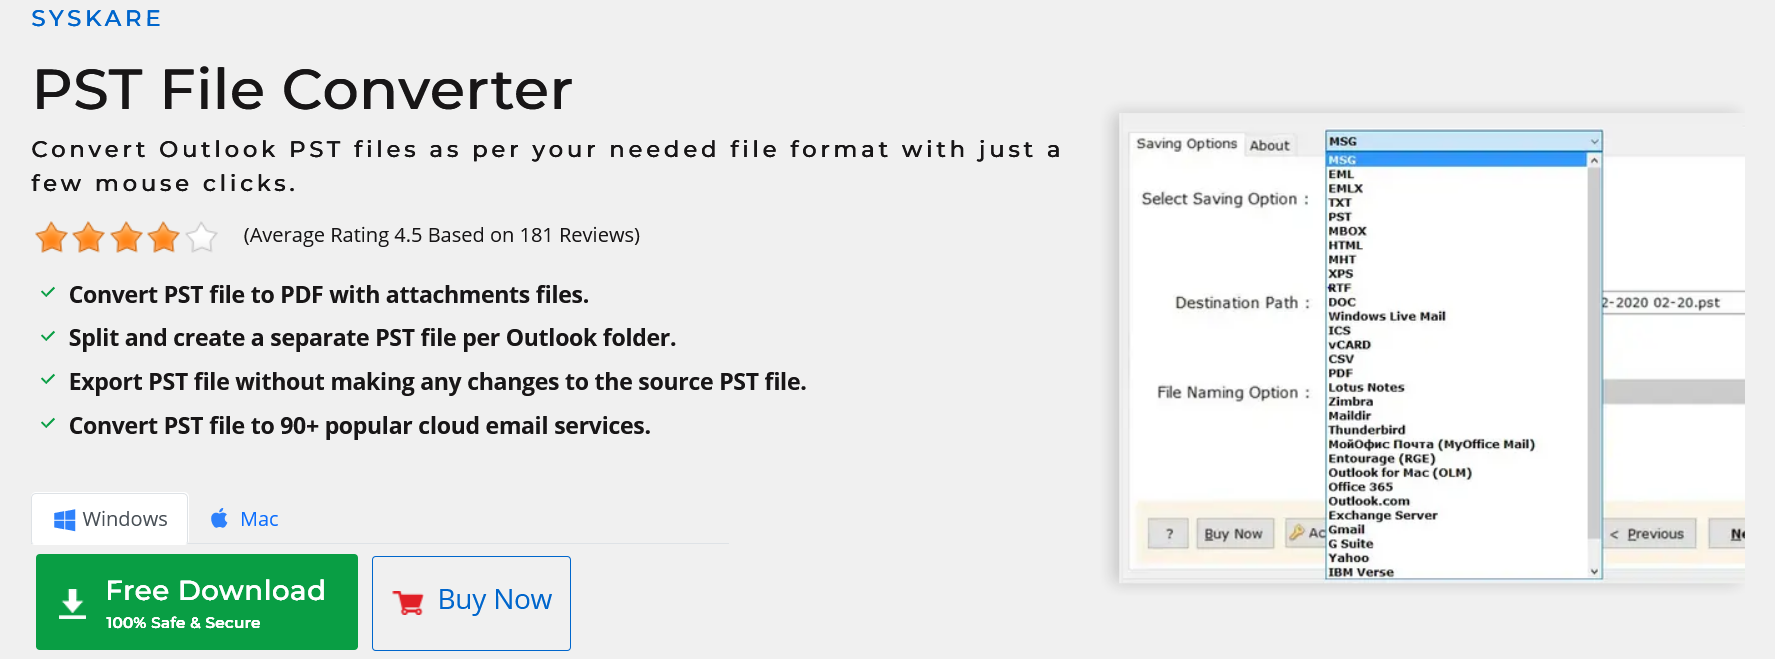 SysKare PST File Converter